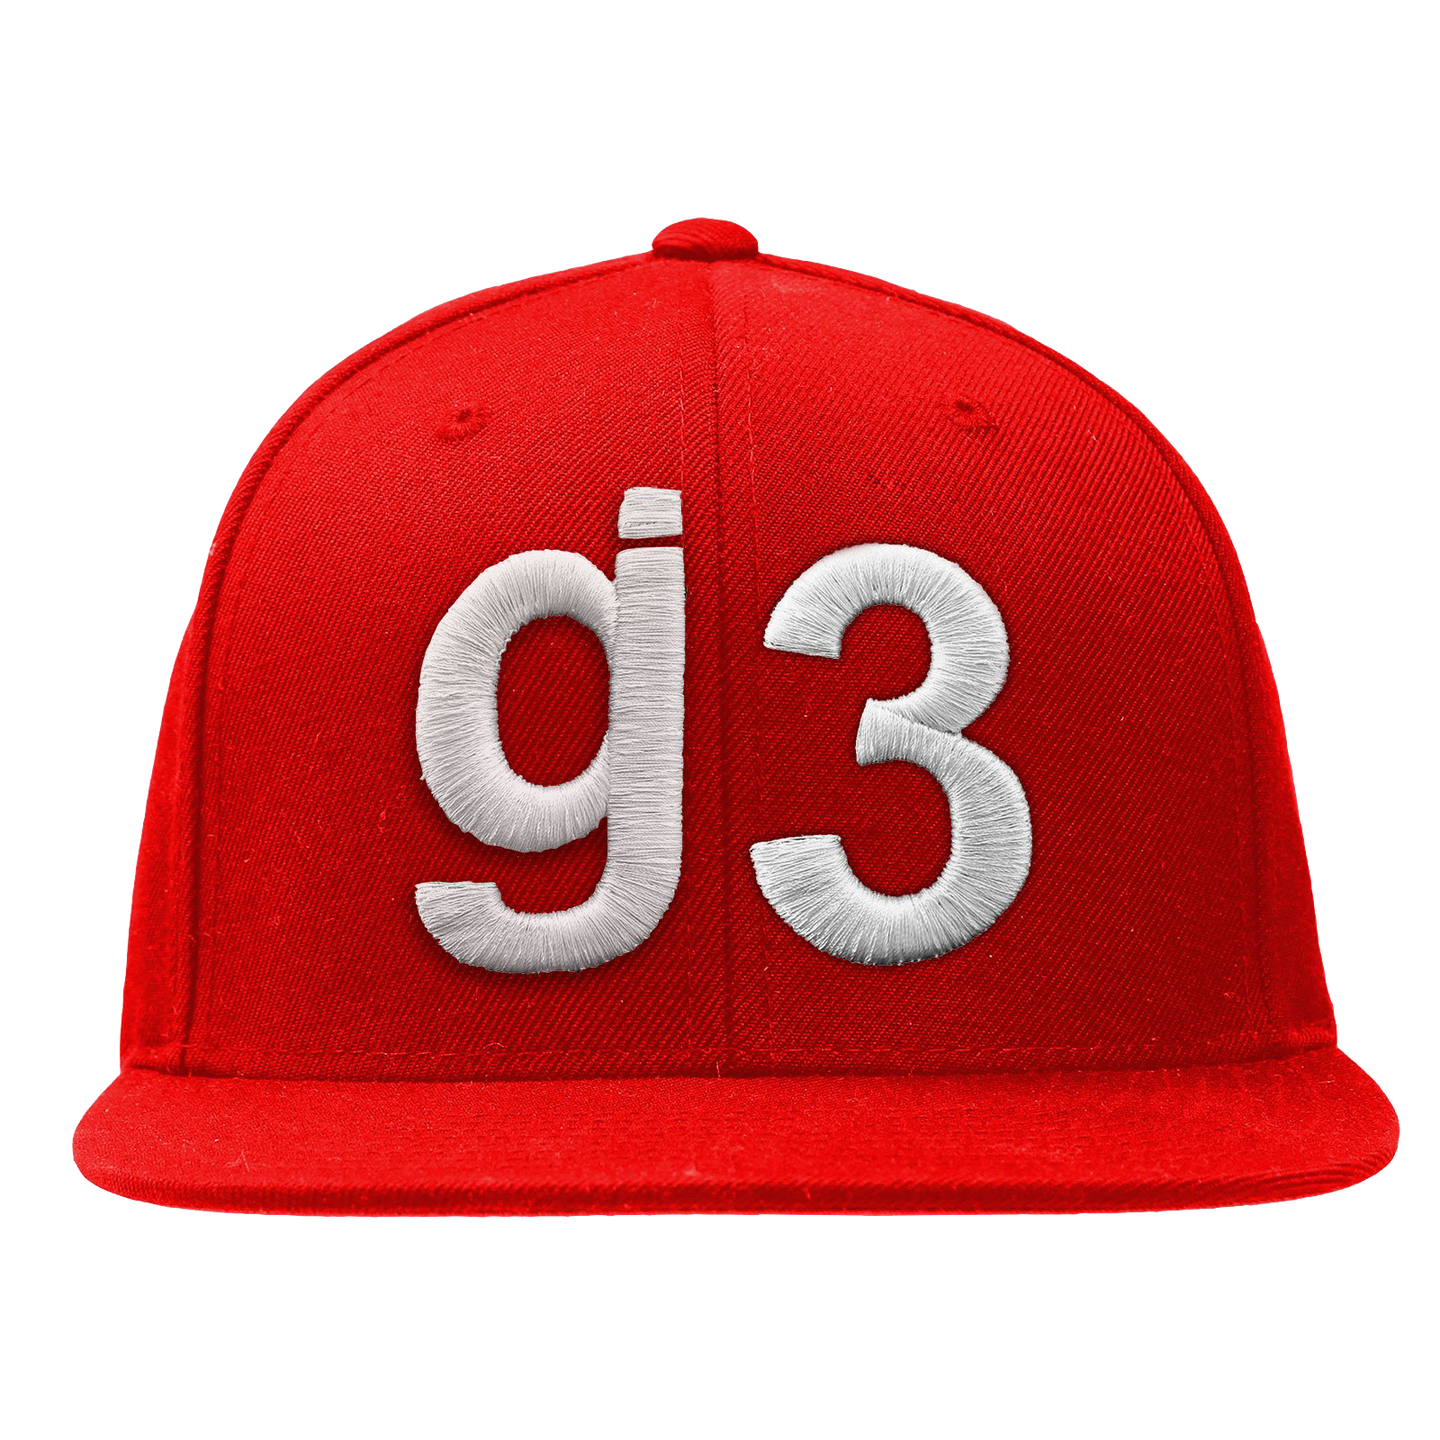 G3 Red Snapback